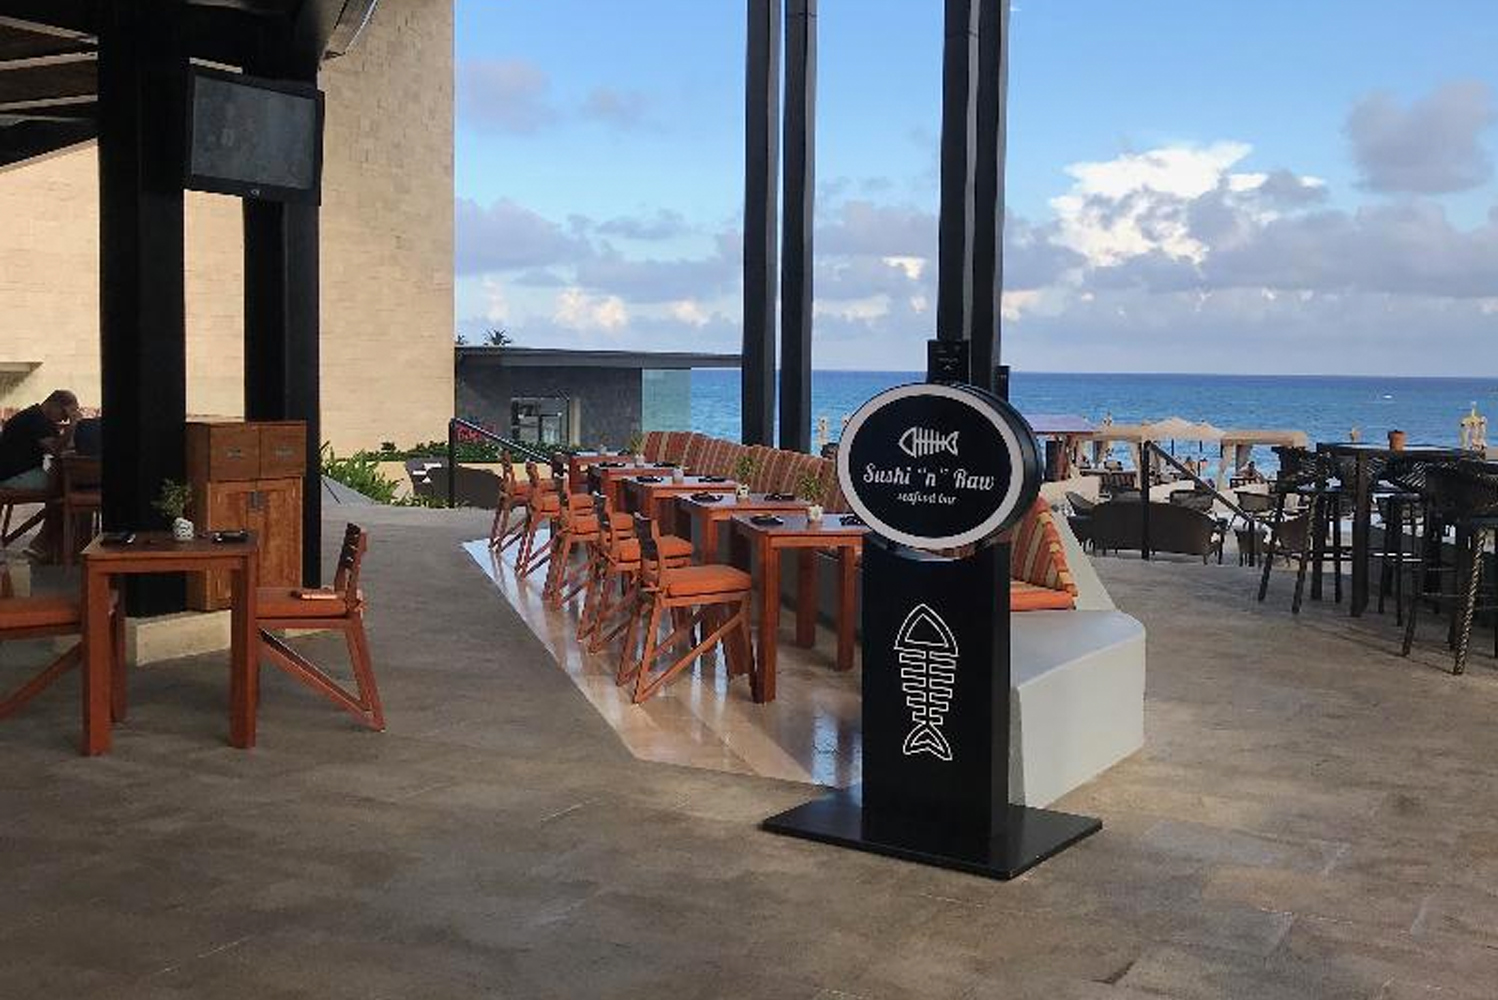 Grand Hyatt Playa del Carmen opened a new dining venue the Sushi n Raw Seafood bar and restaurant 